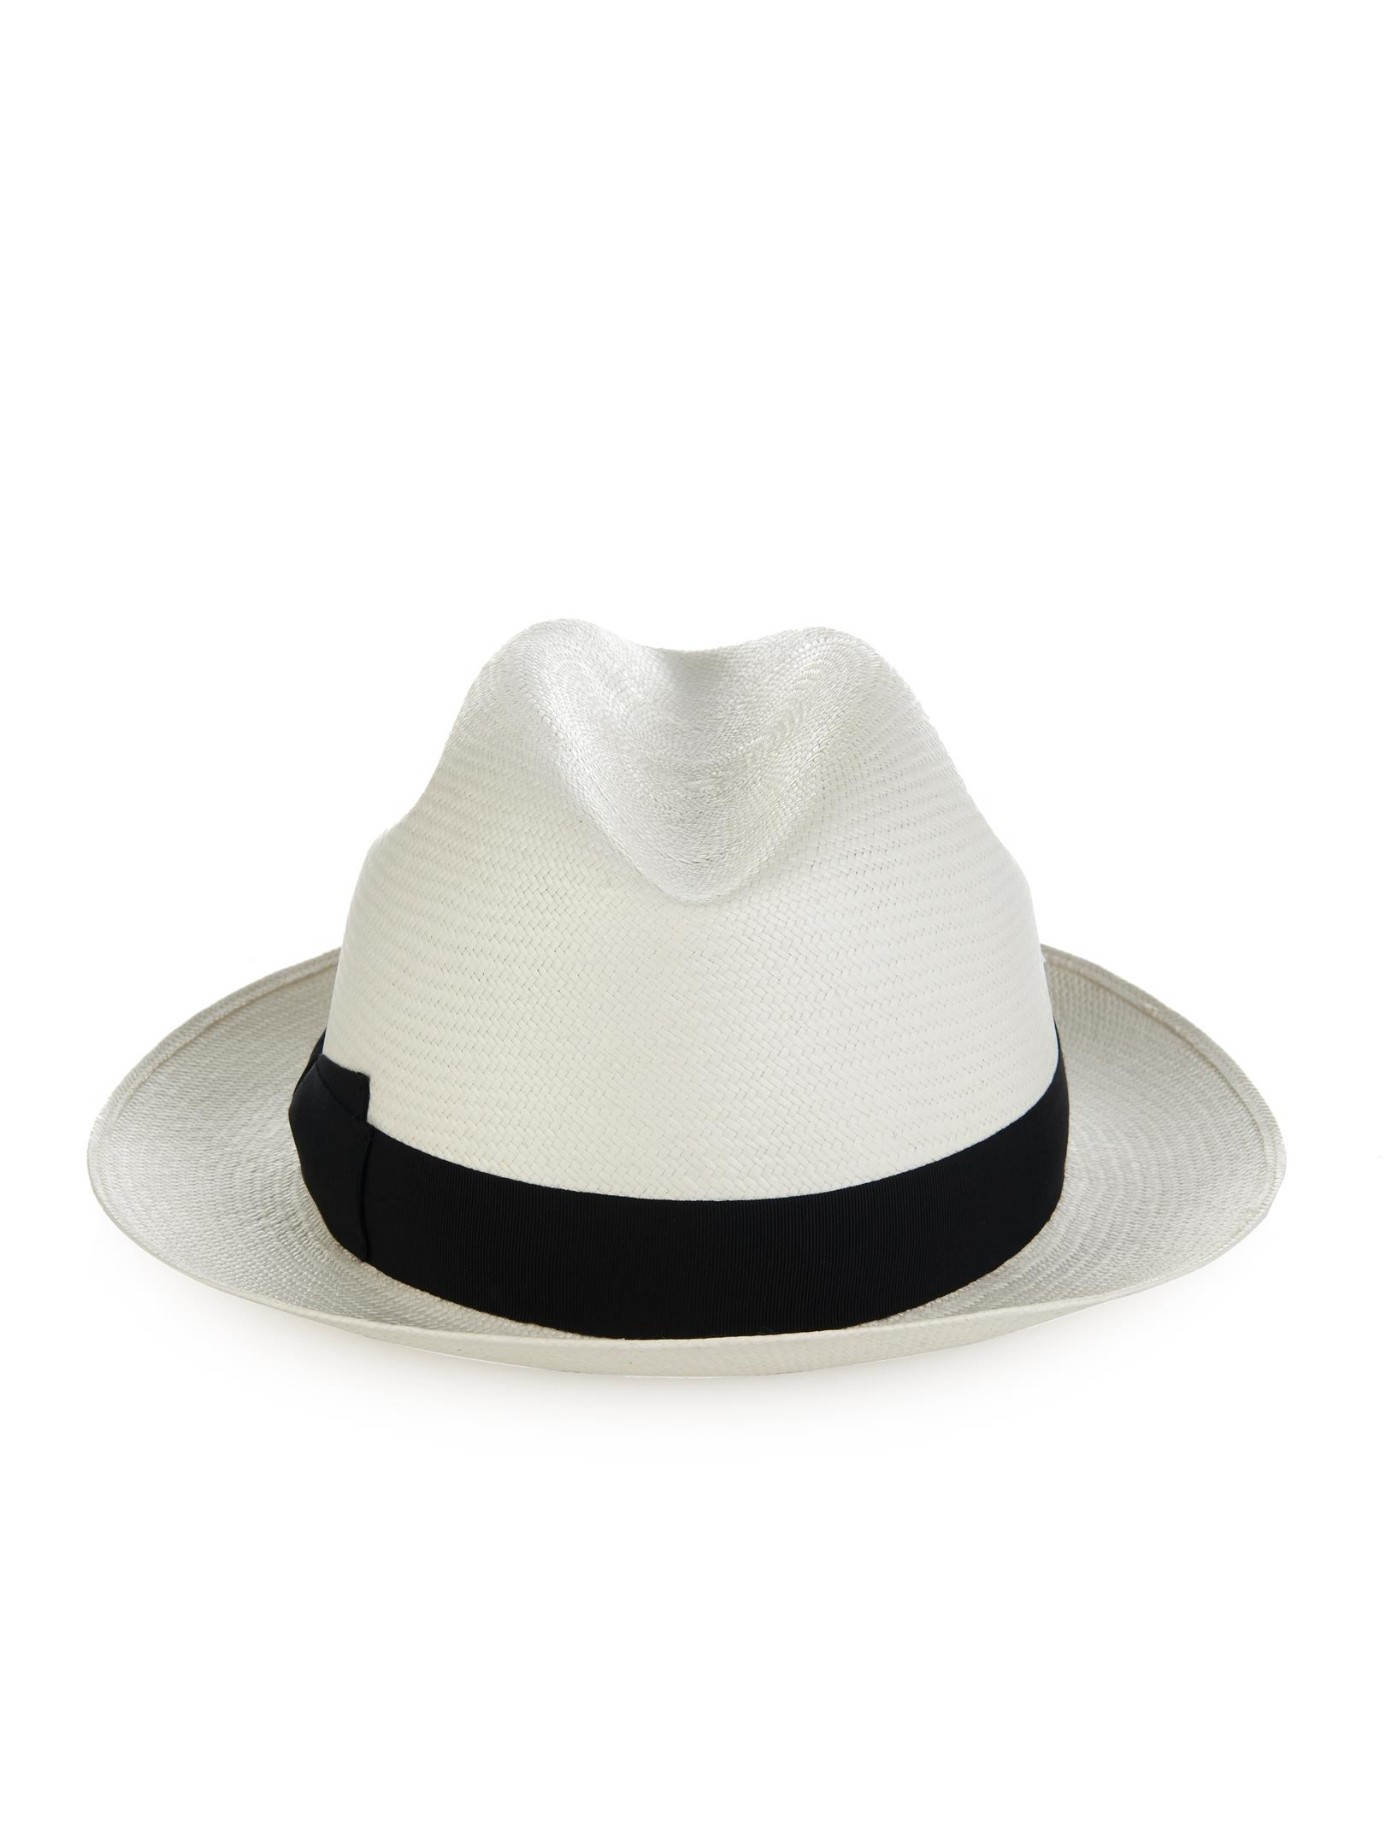 Lyst - Borsalino Panama Straw Hat in Black for Men